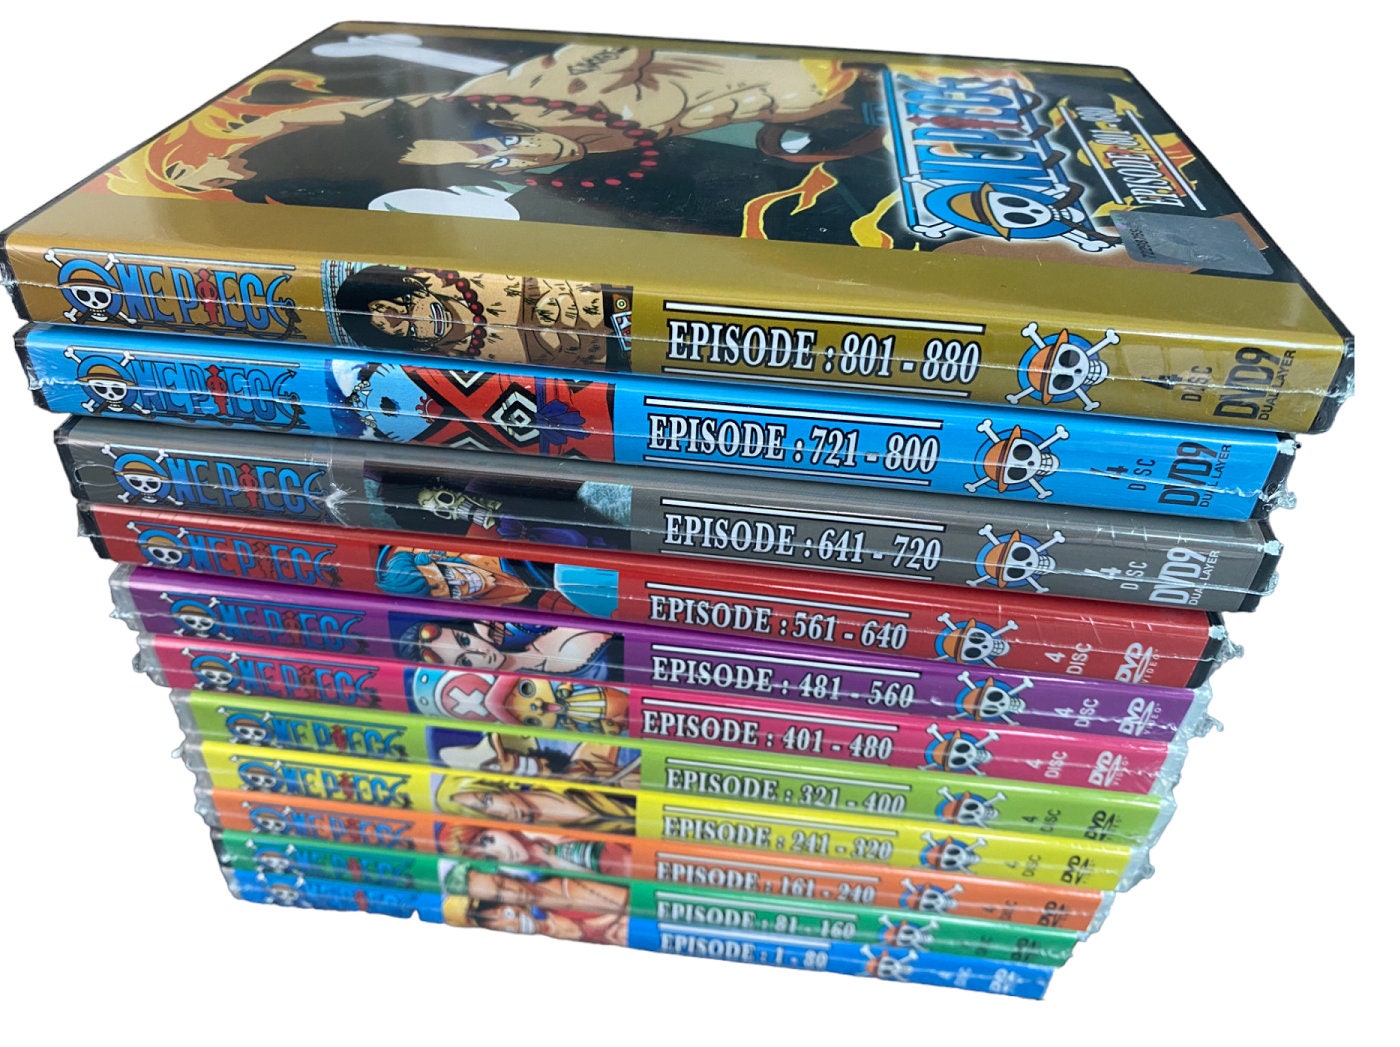 ONE PIECE (EPISODES 801-880) - ANIME TV SERIES DVD BOX SET (ENGLISH DUBBED)